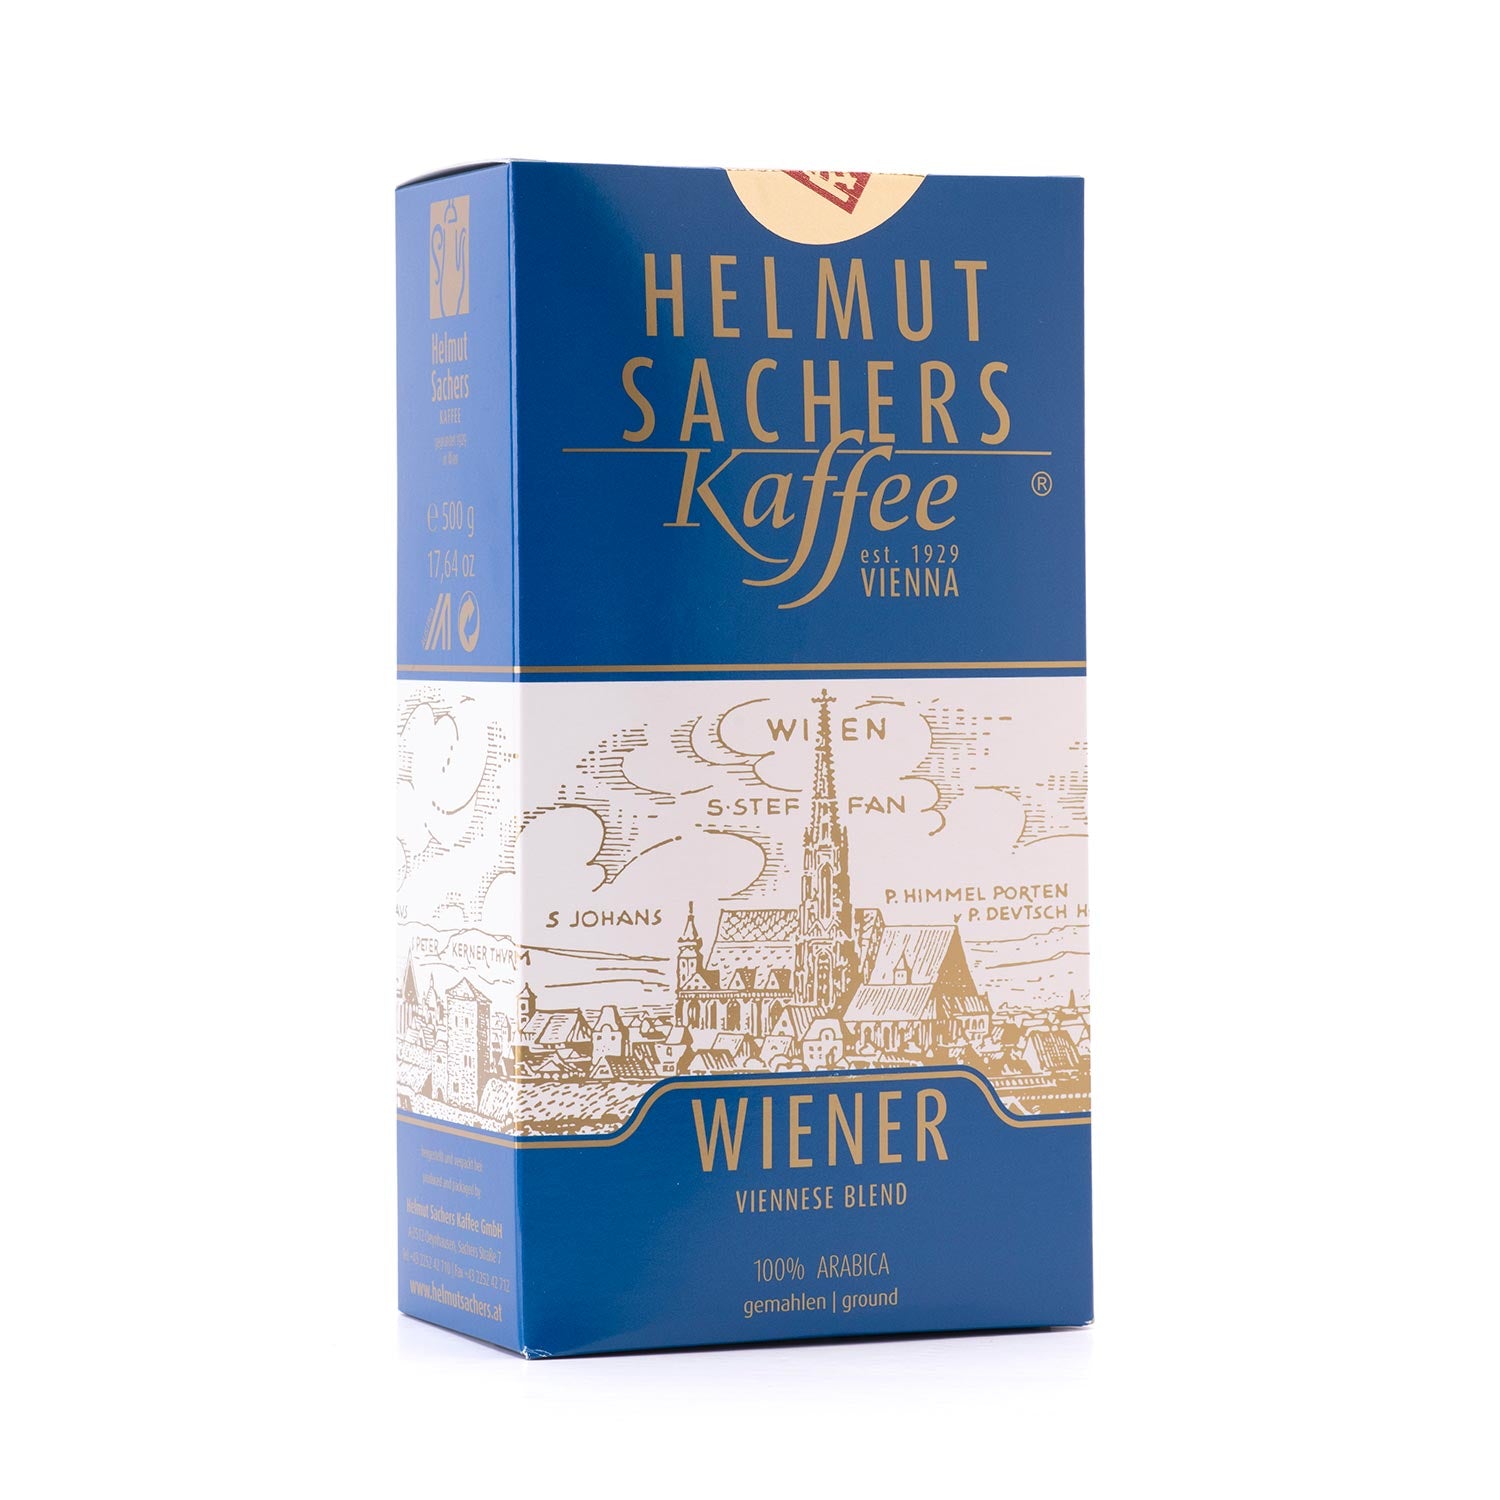 Helmut Sacher's Kaffee - Wiener Mischung